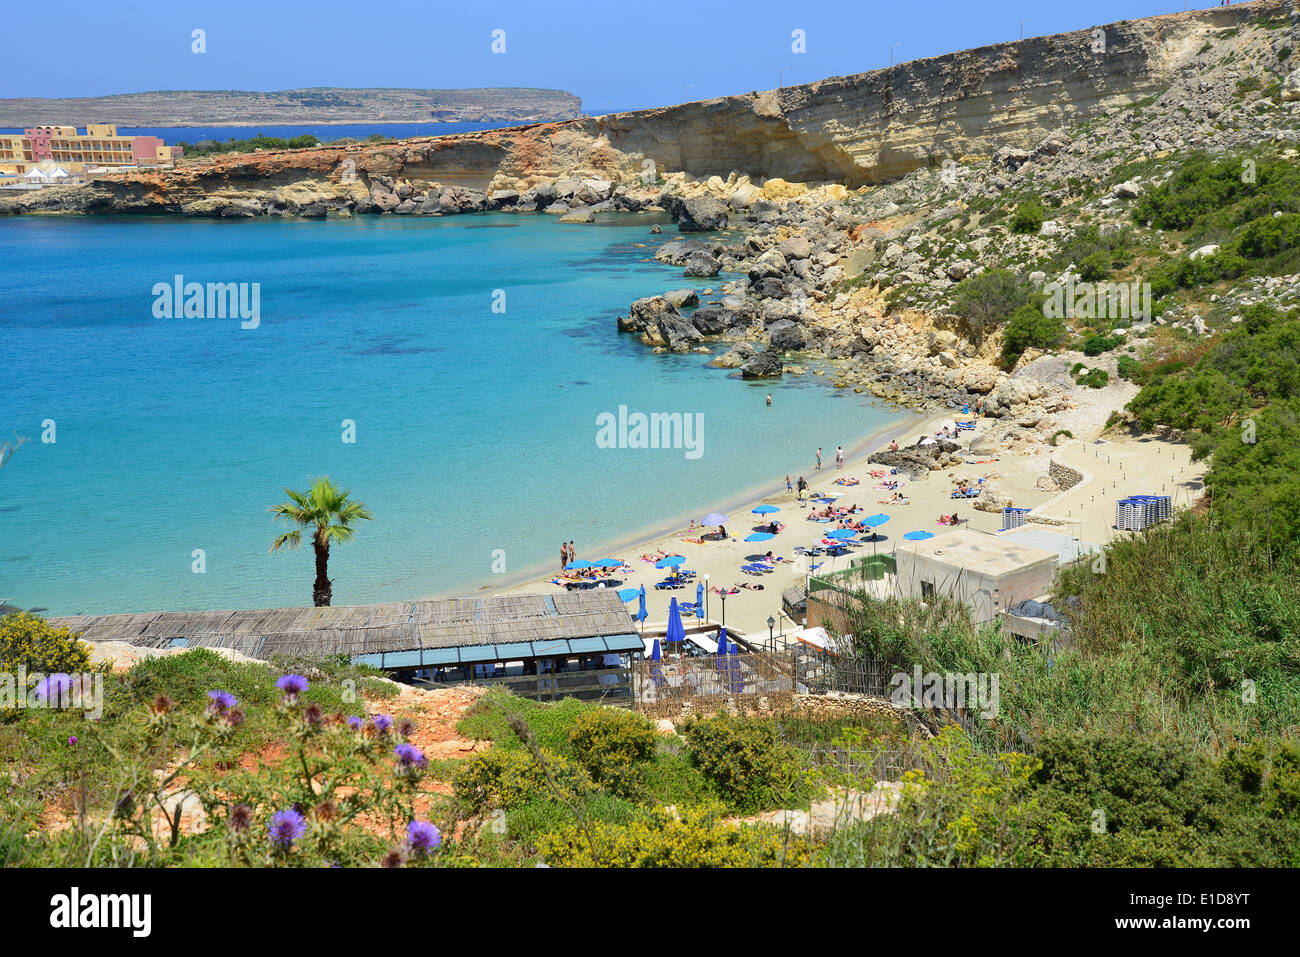 Beach view, Paradise Bay, Northern District, Malta Majjistral Region, Republic of Malta Stock Photo